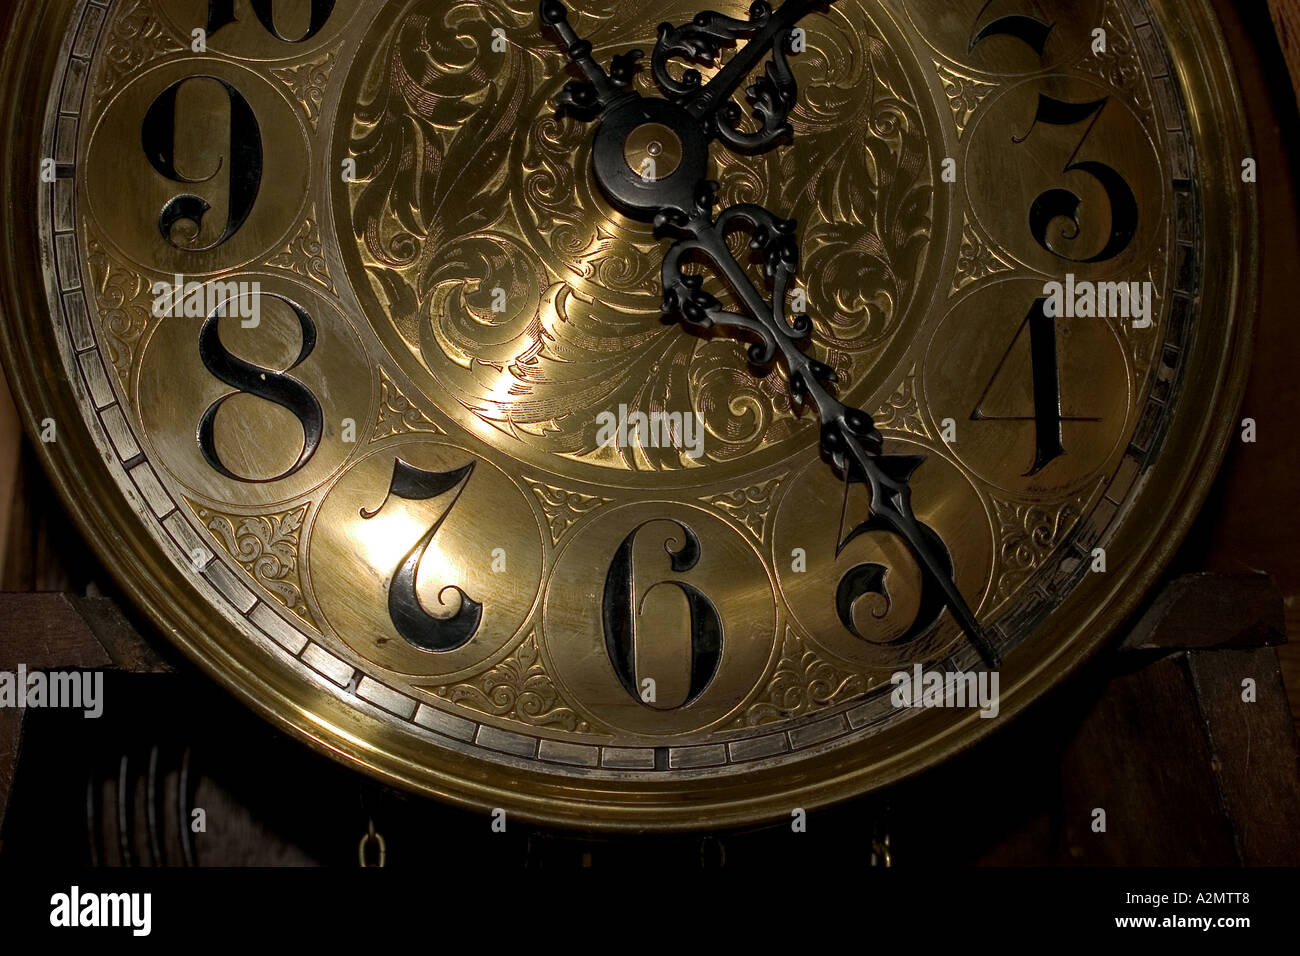 clock face of a grandfather clock Stock Photo